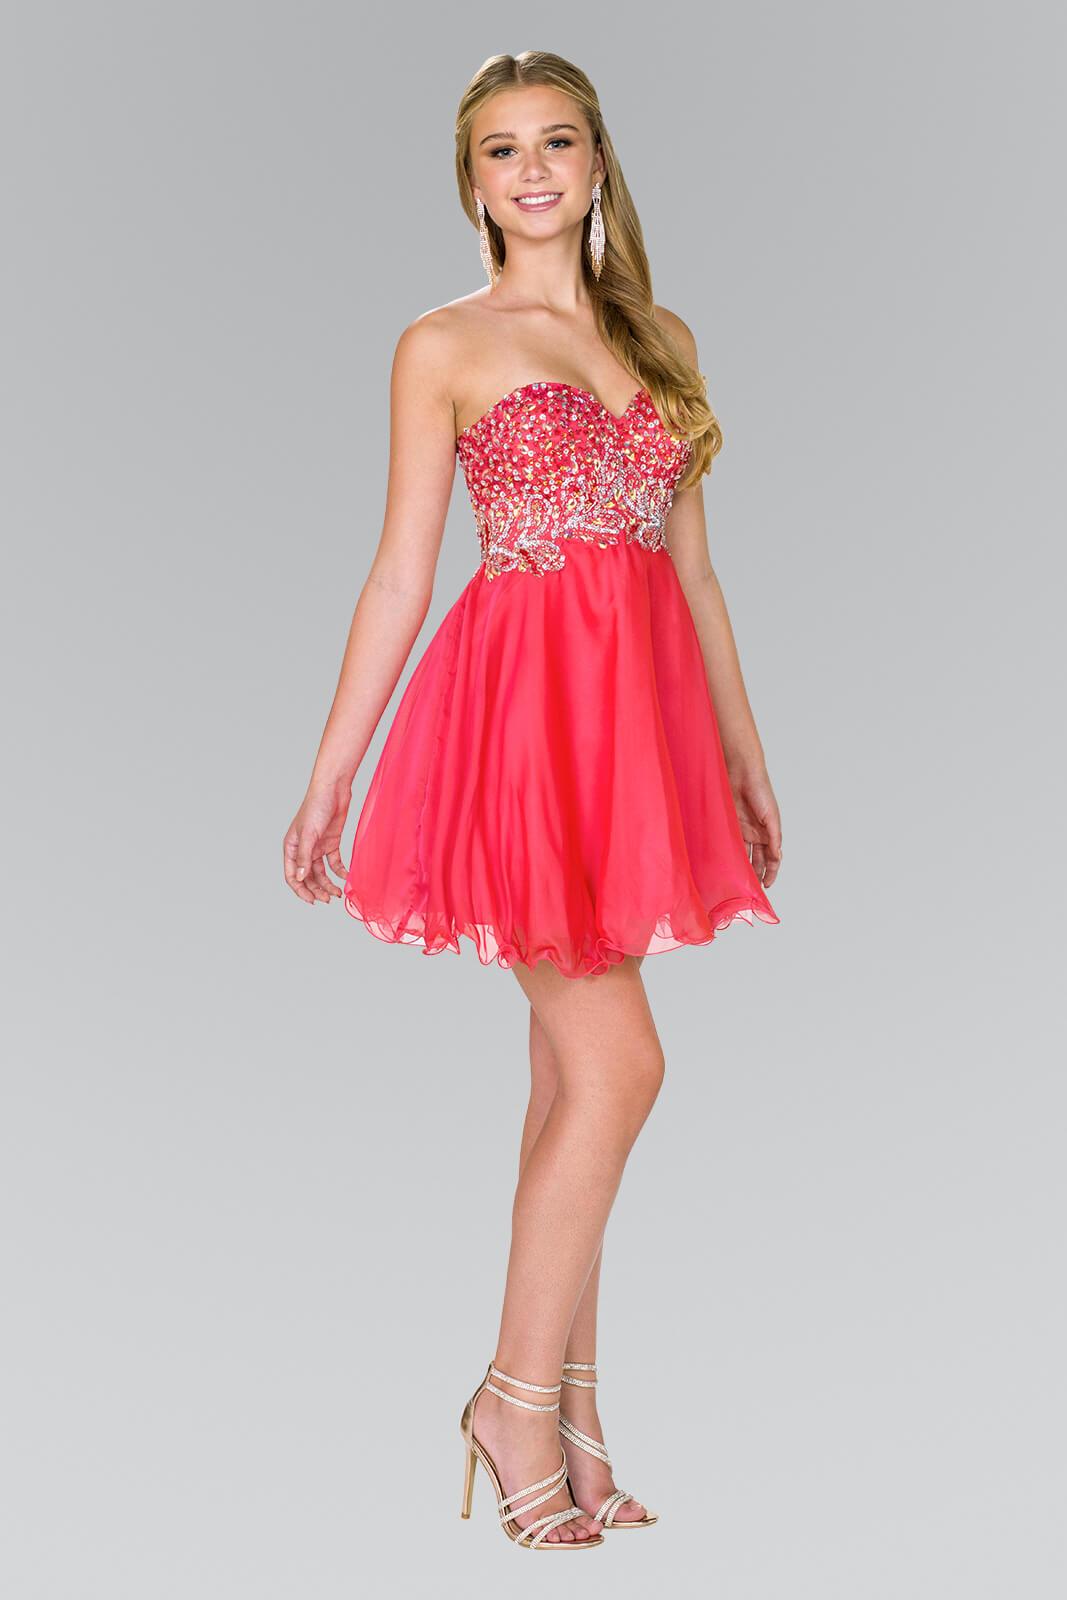 Strapless Prom Short Dress Homecoming - The Dress Outlet Elizabeth K